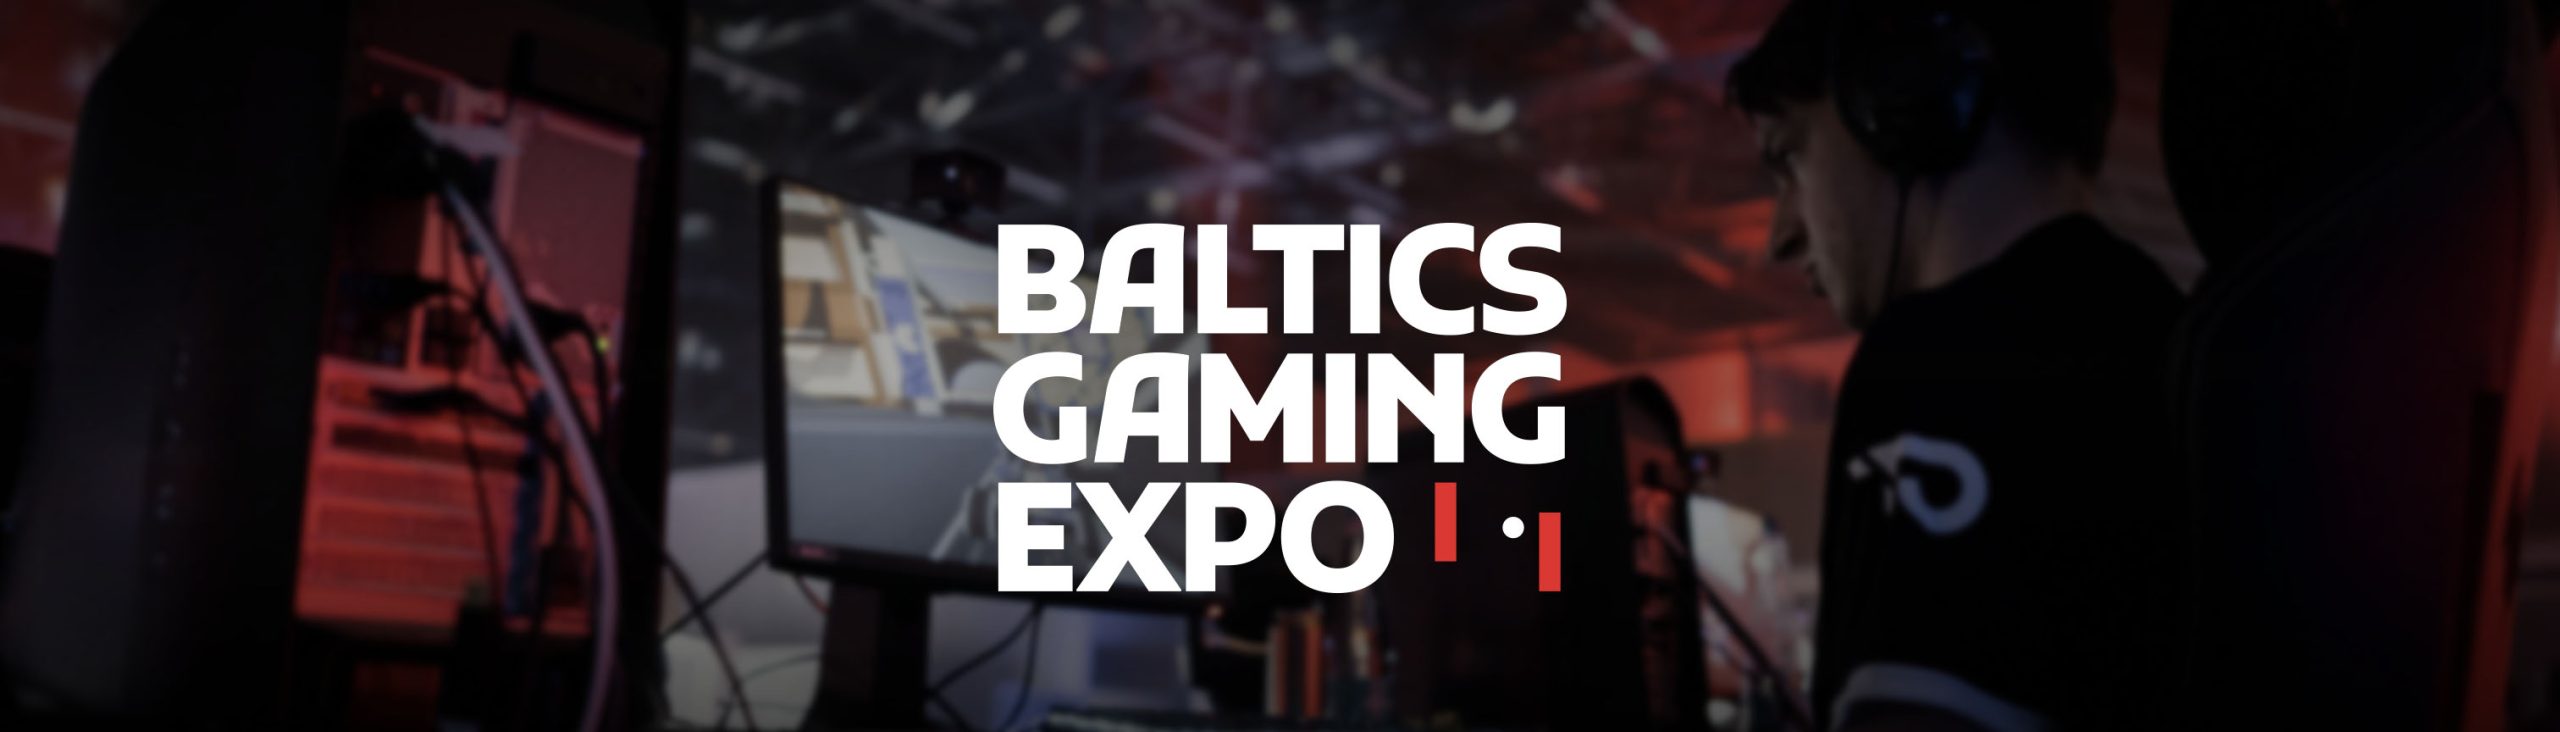 Baltics Gaming Expo